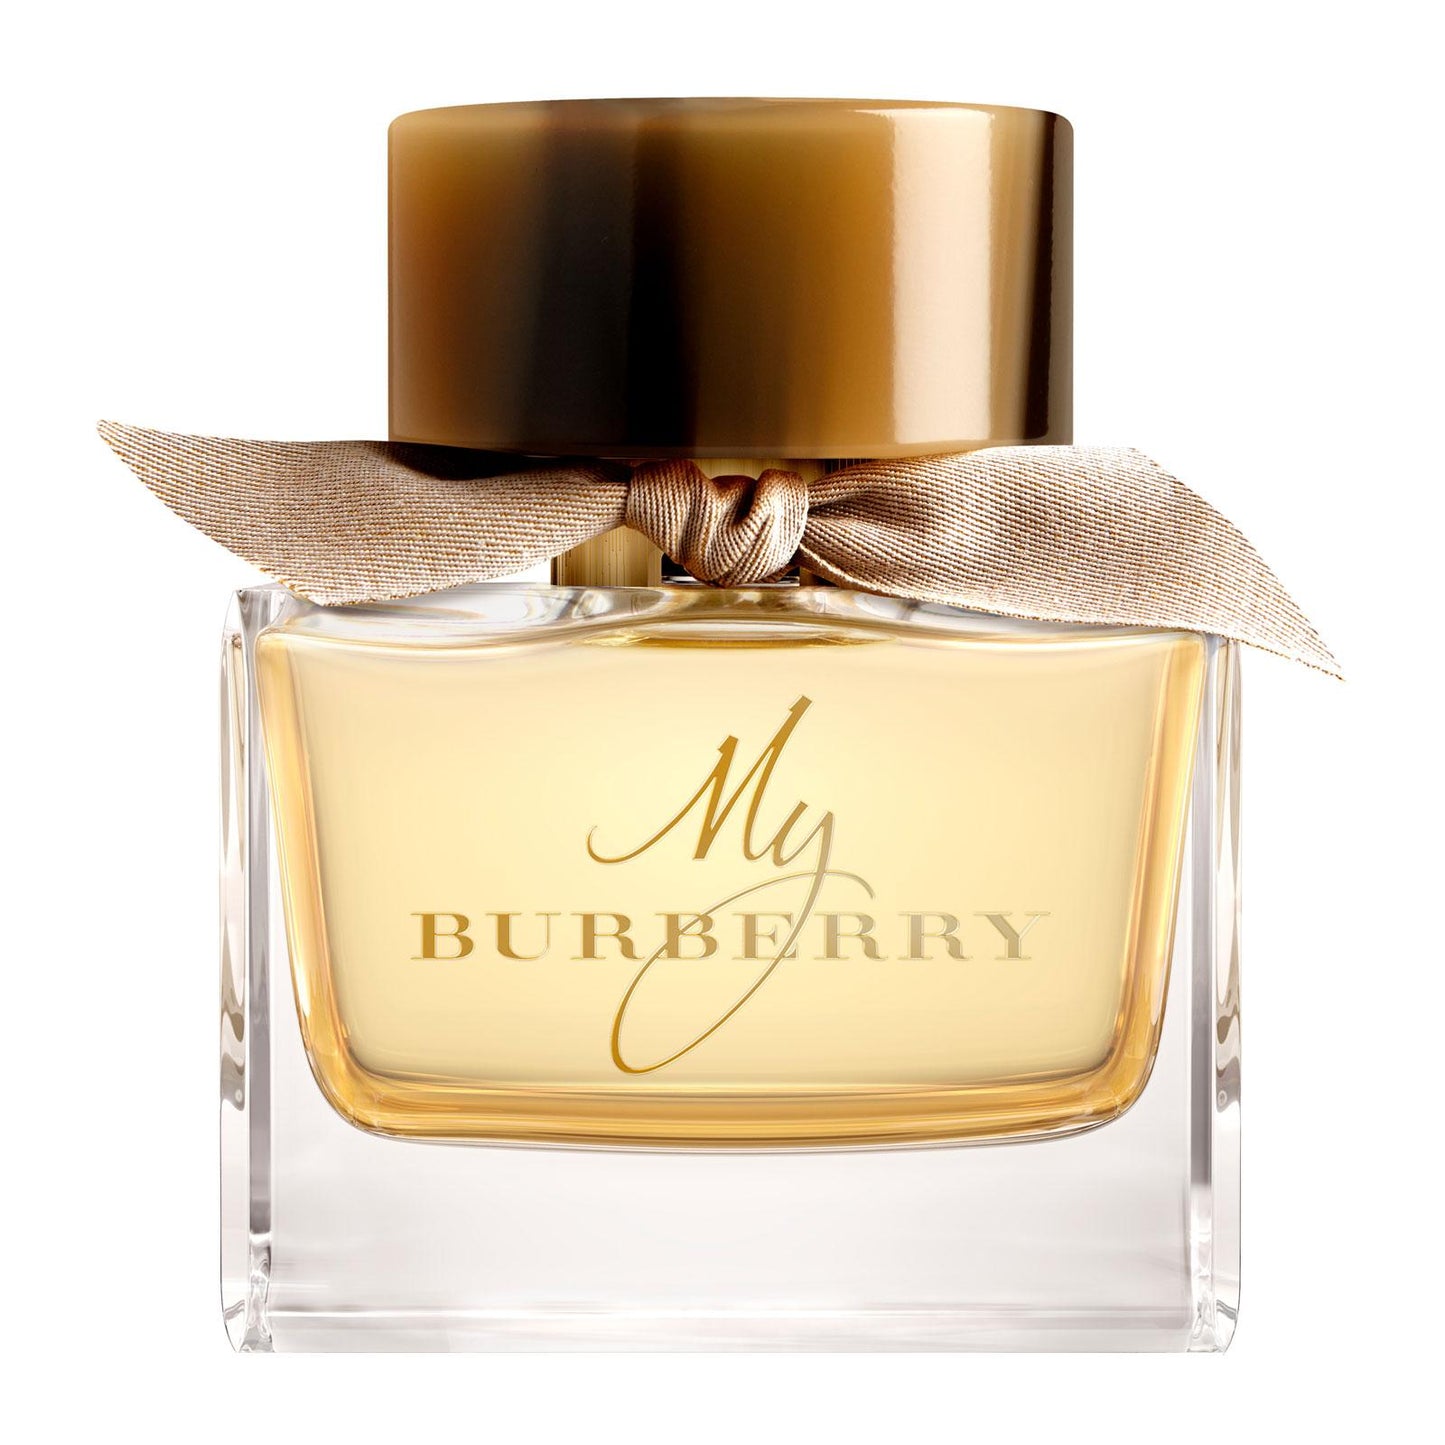 Burberry - My Burberry 90ml